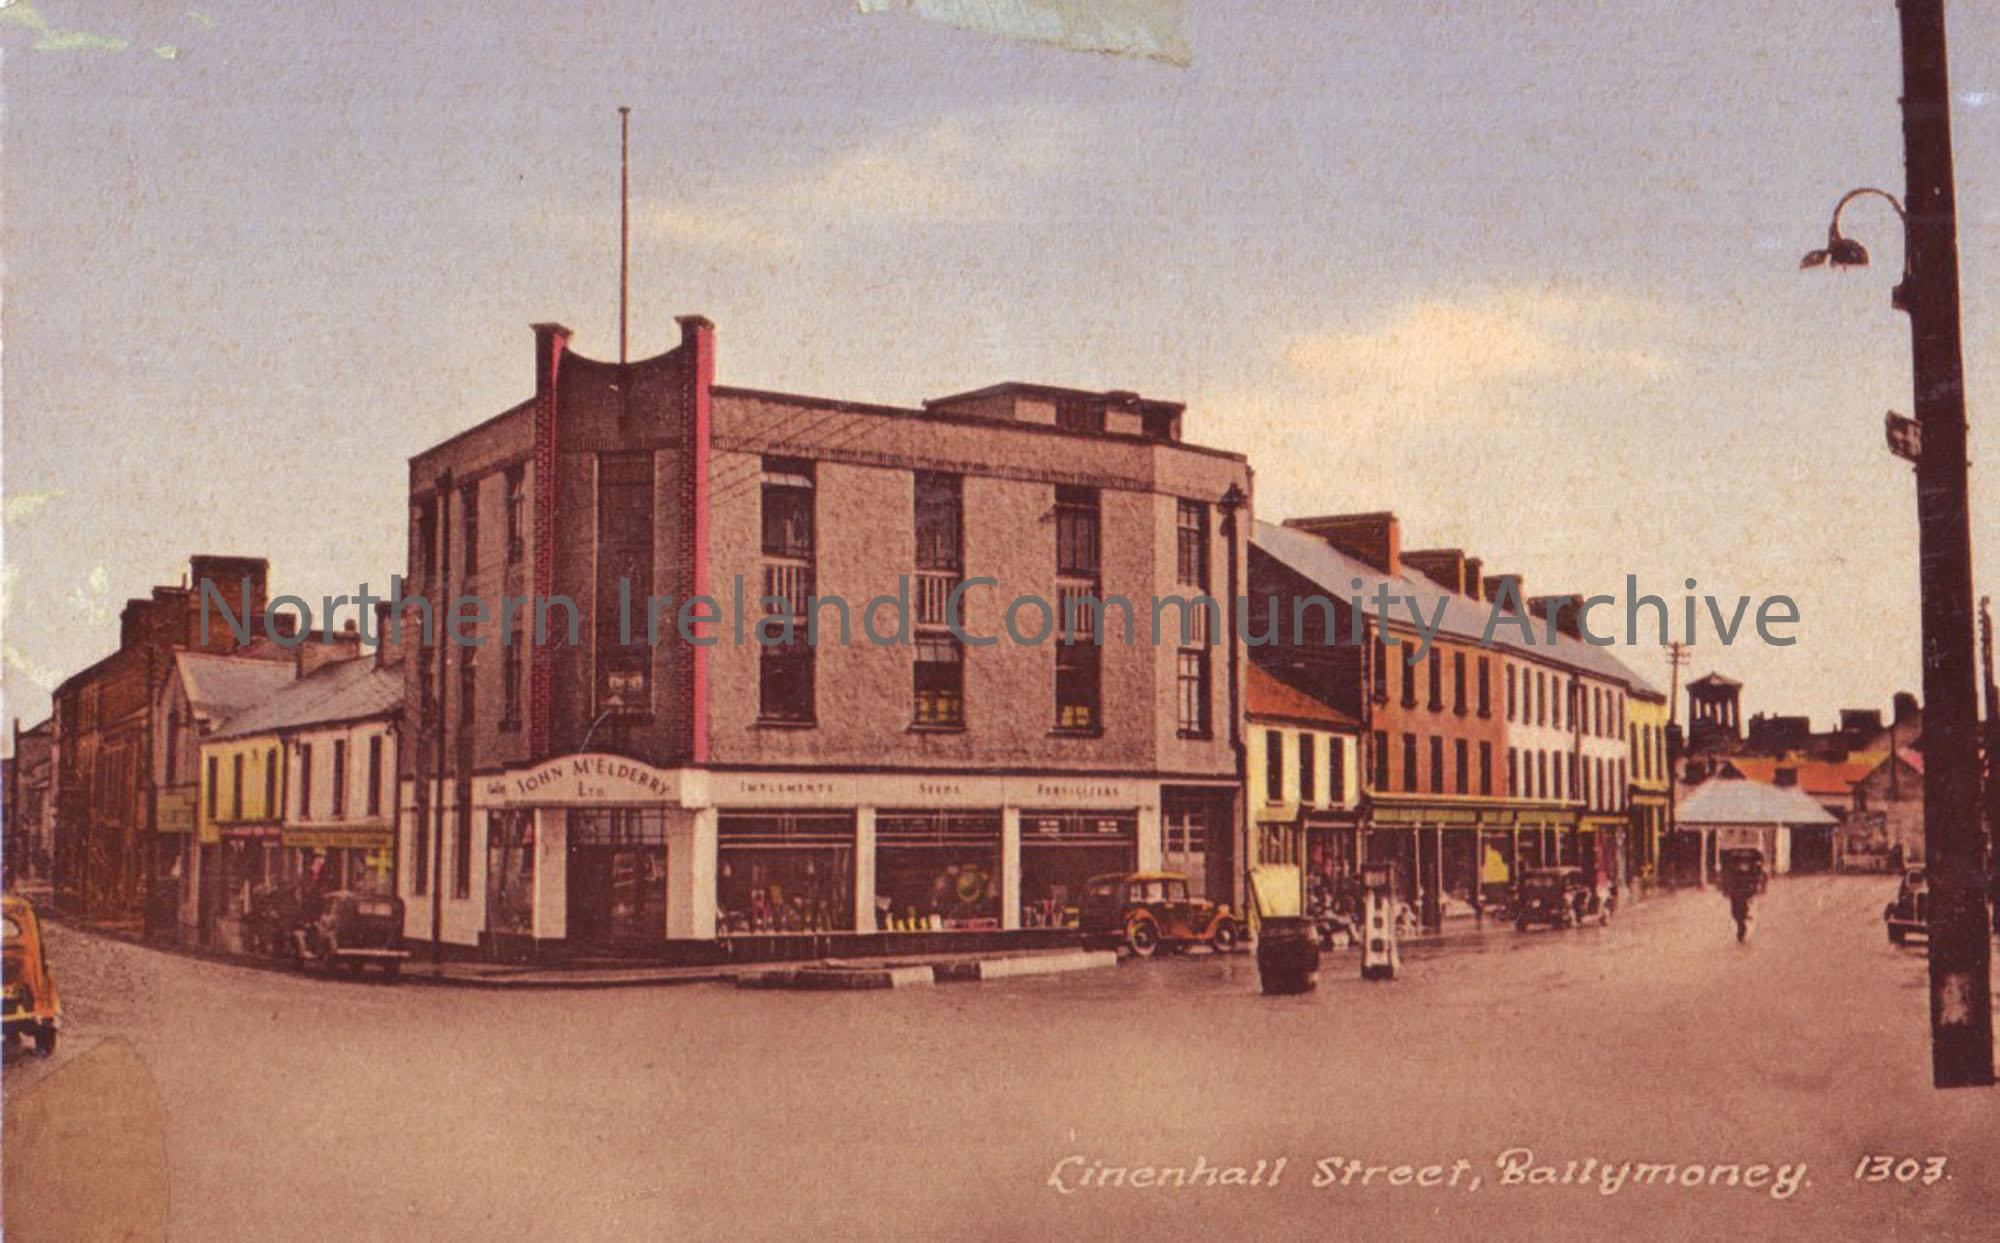 Postcard with a photograph of Linenhall street, Ballymoney. John McElderry LTD can be seen in the photograph